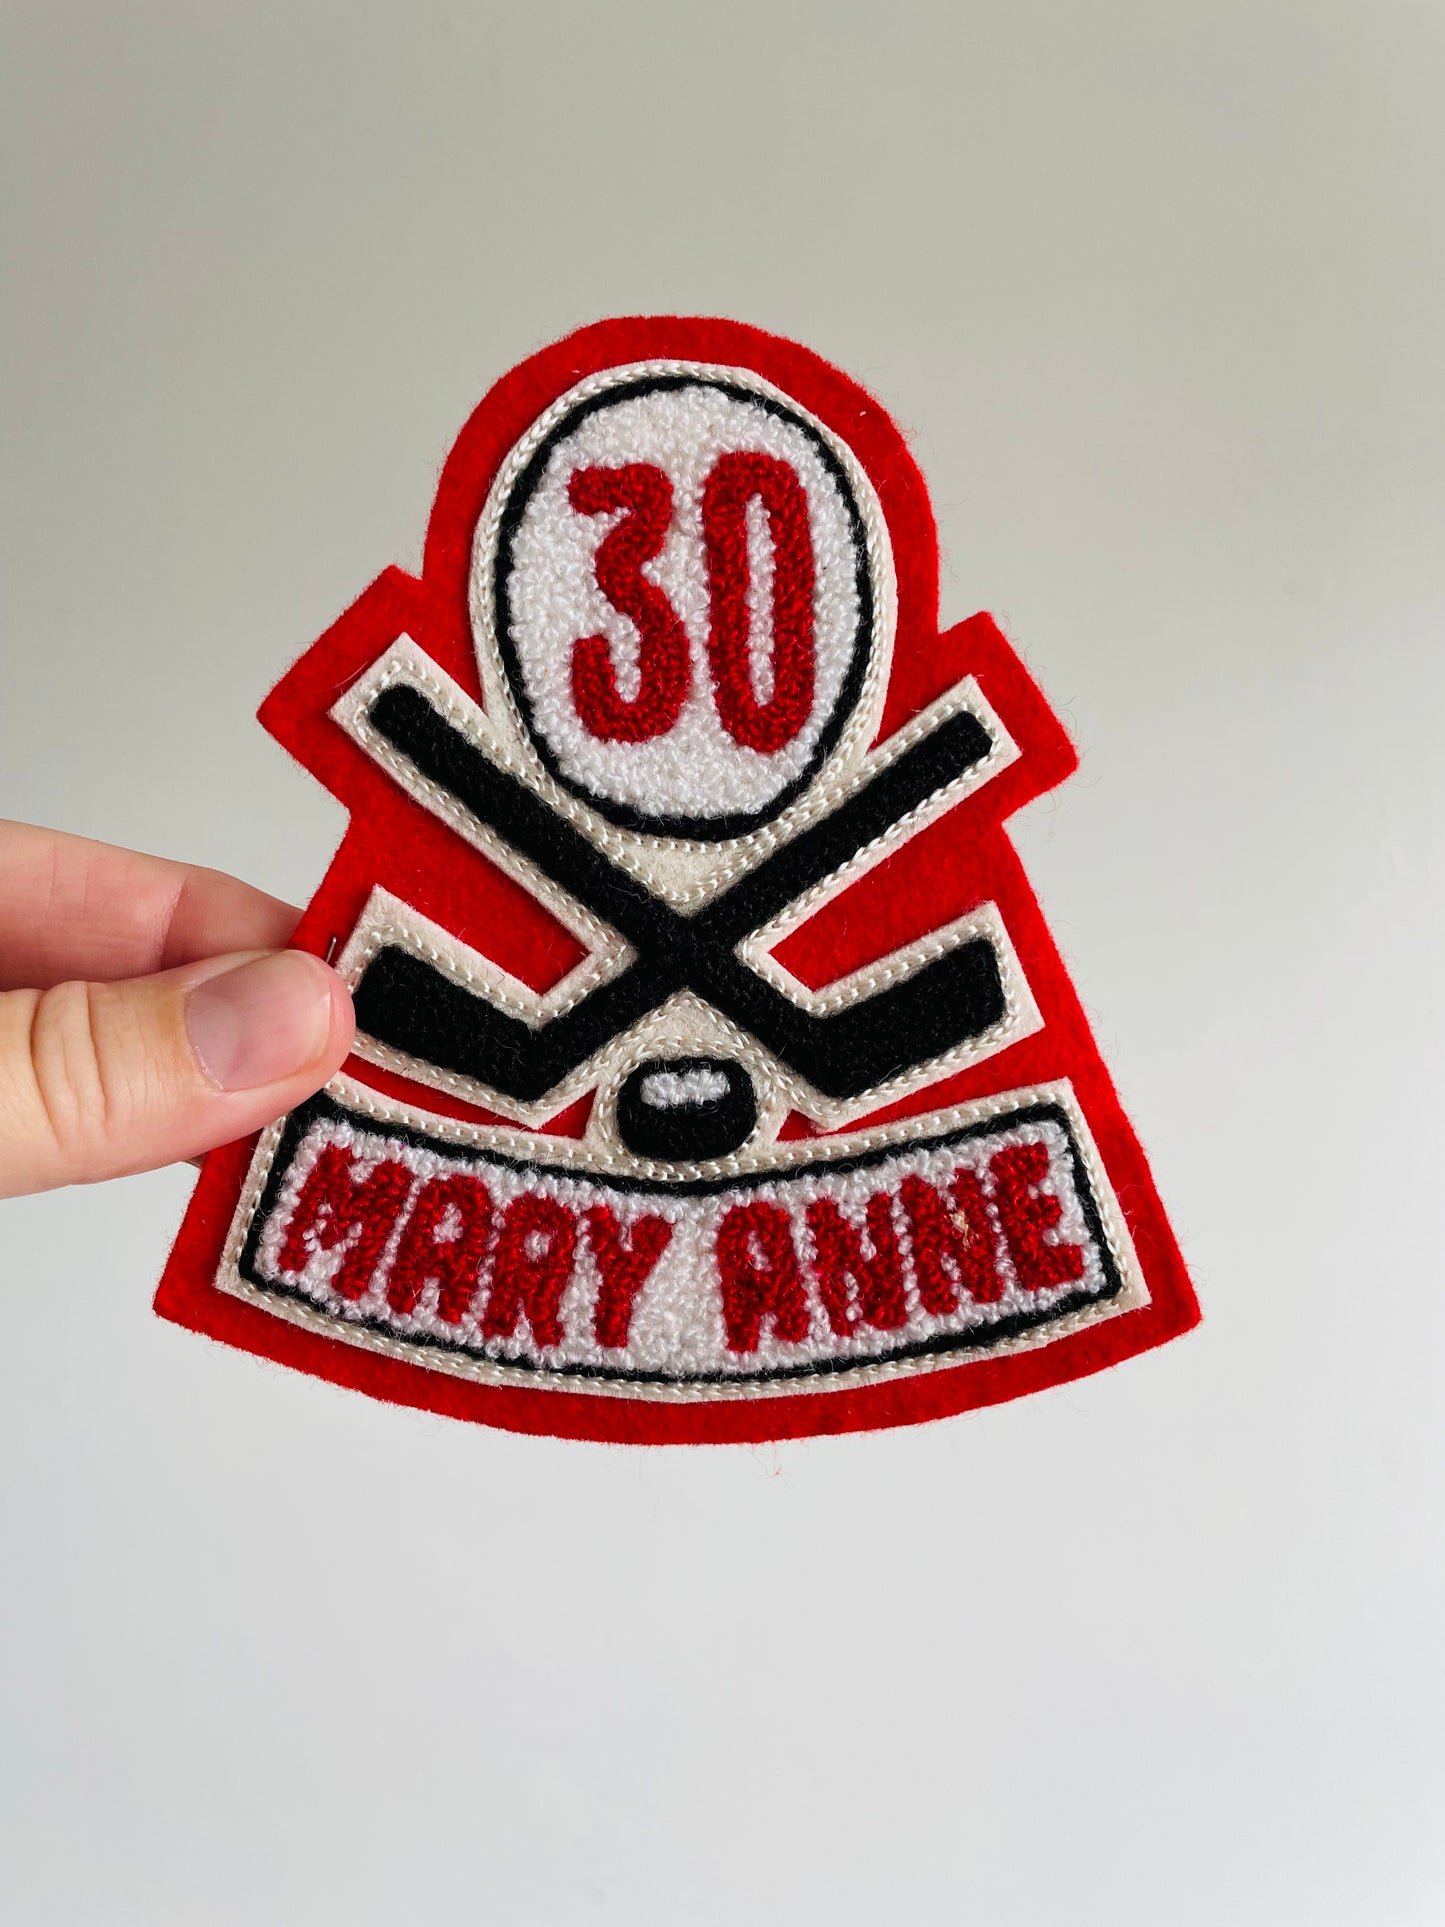 Vintage Felt Hockey Patch - #30 Mary Anne